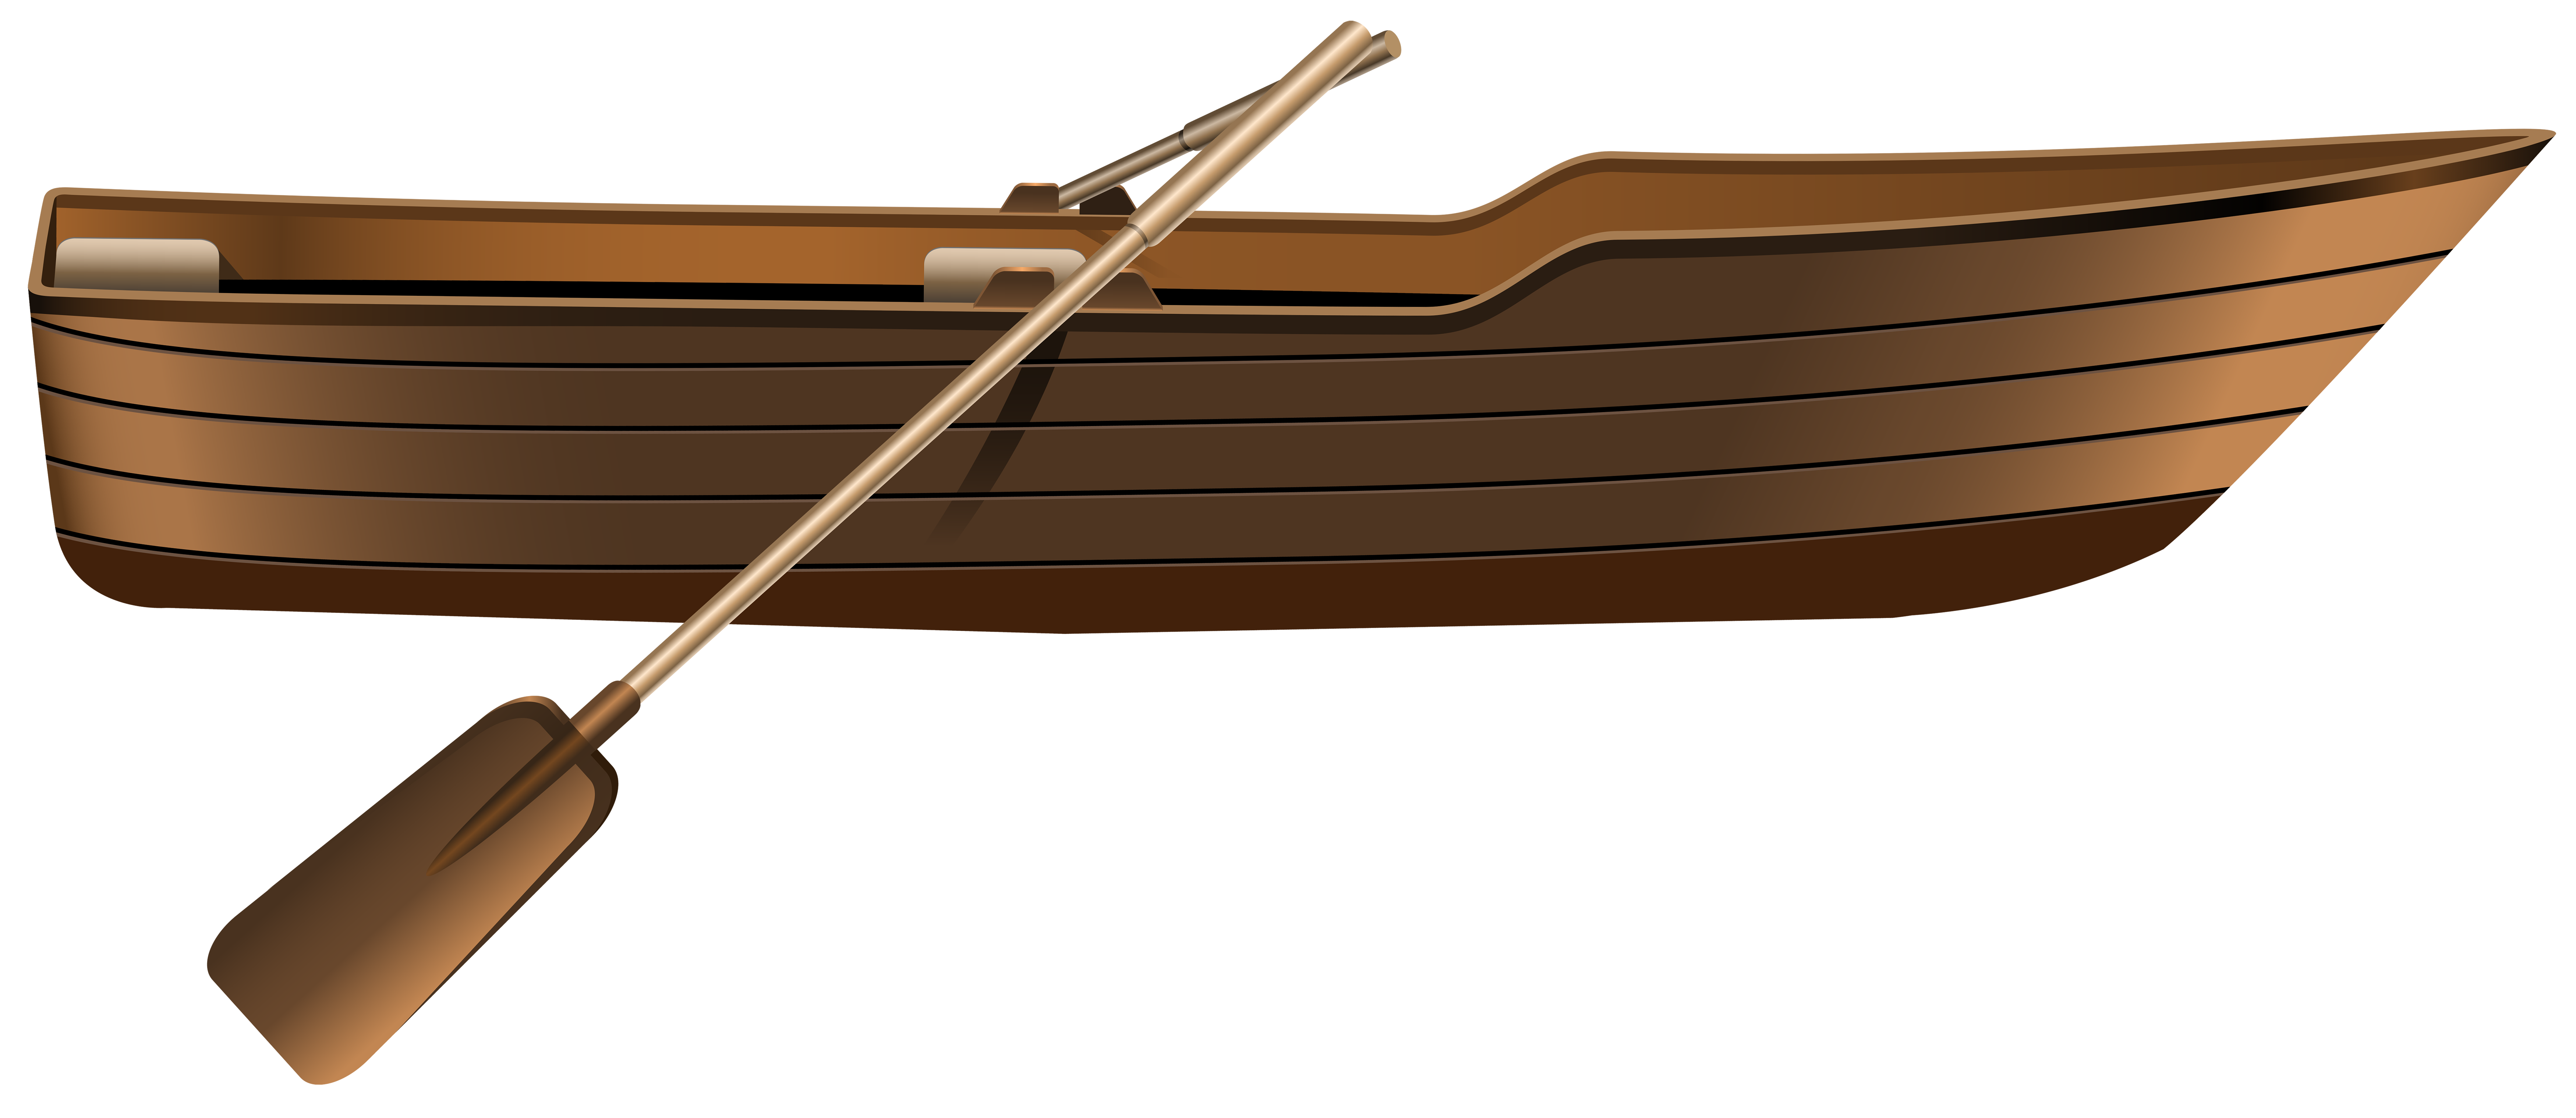 clip art wooden boat - photo #1